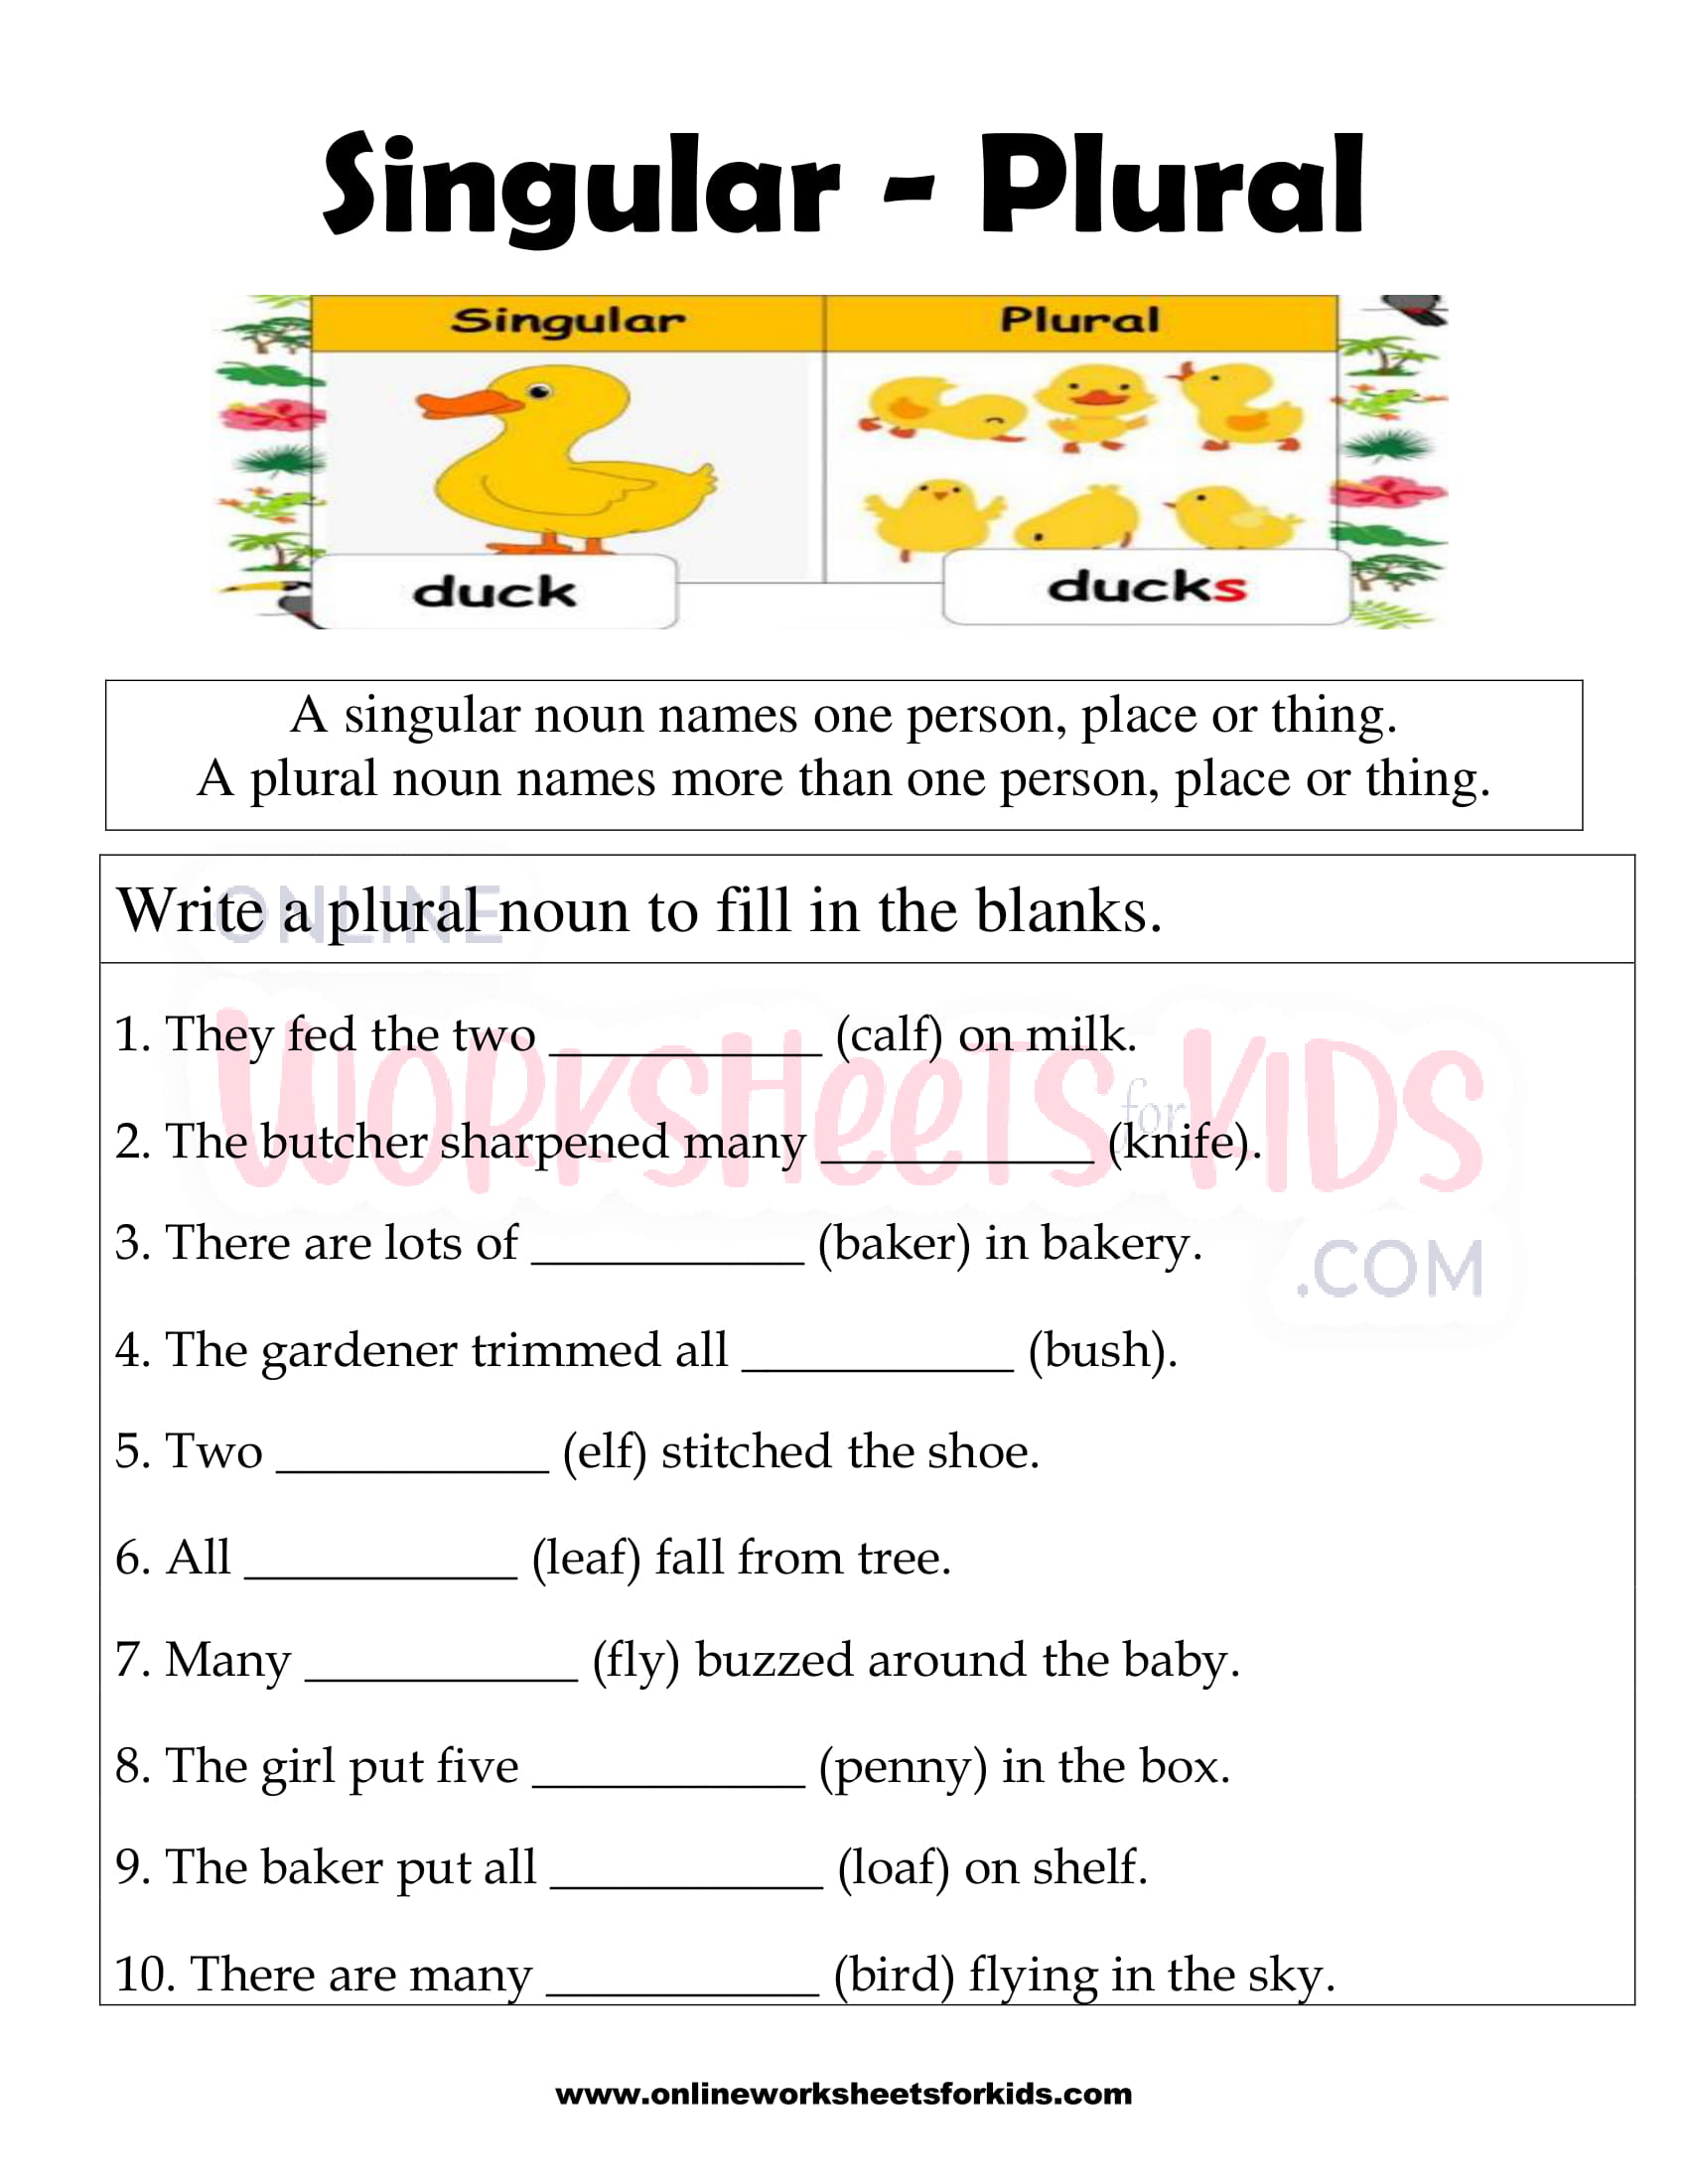 singular-and-plural-nouns-fb-worksheet-6